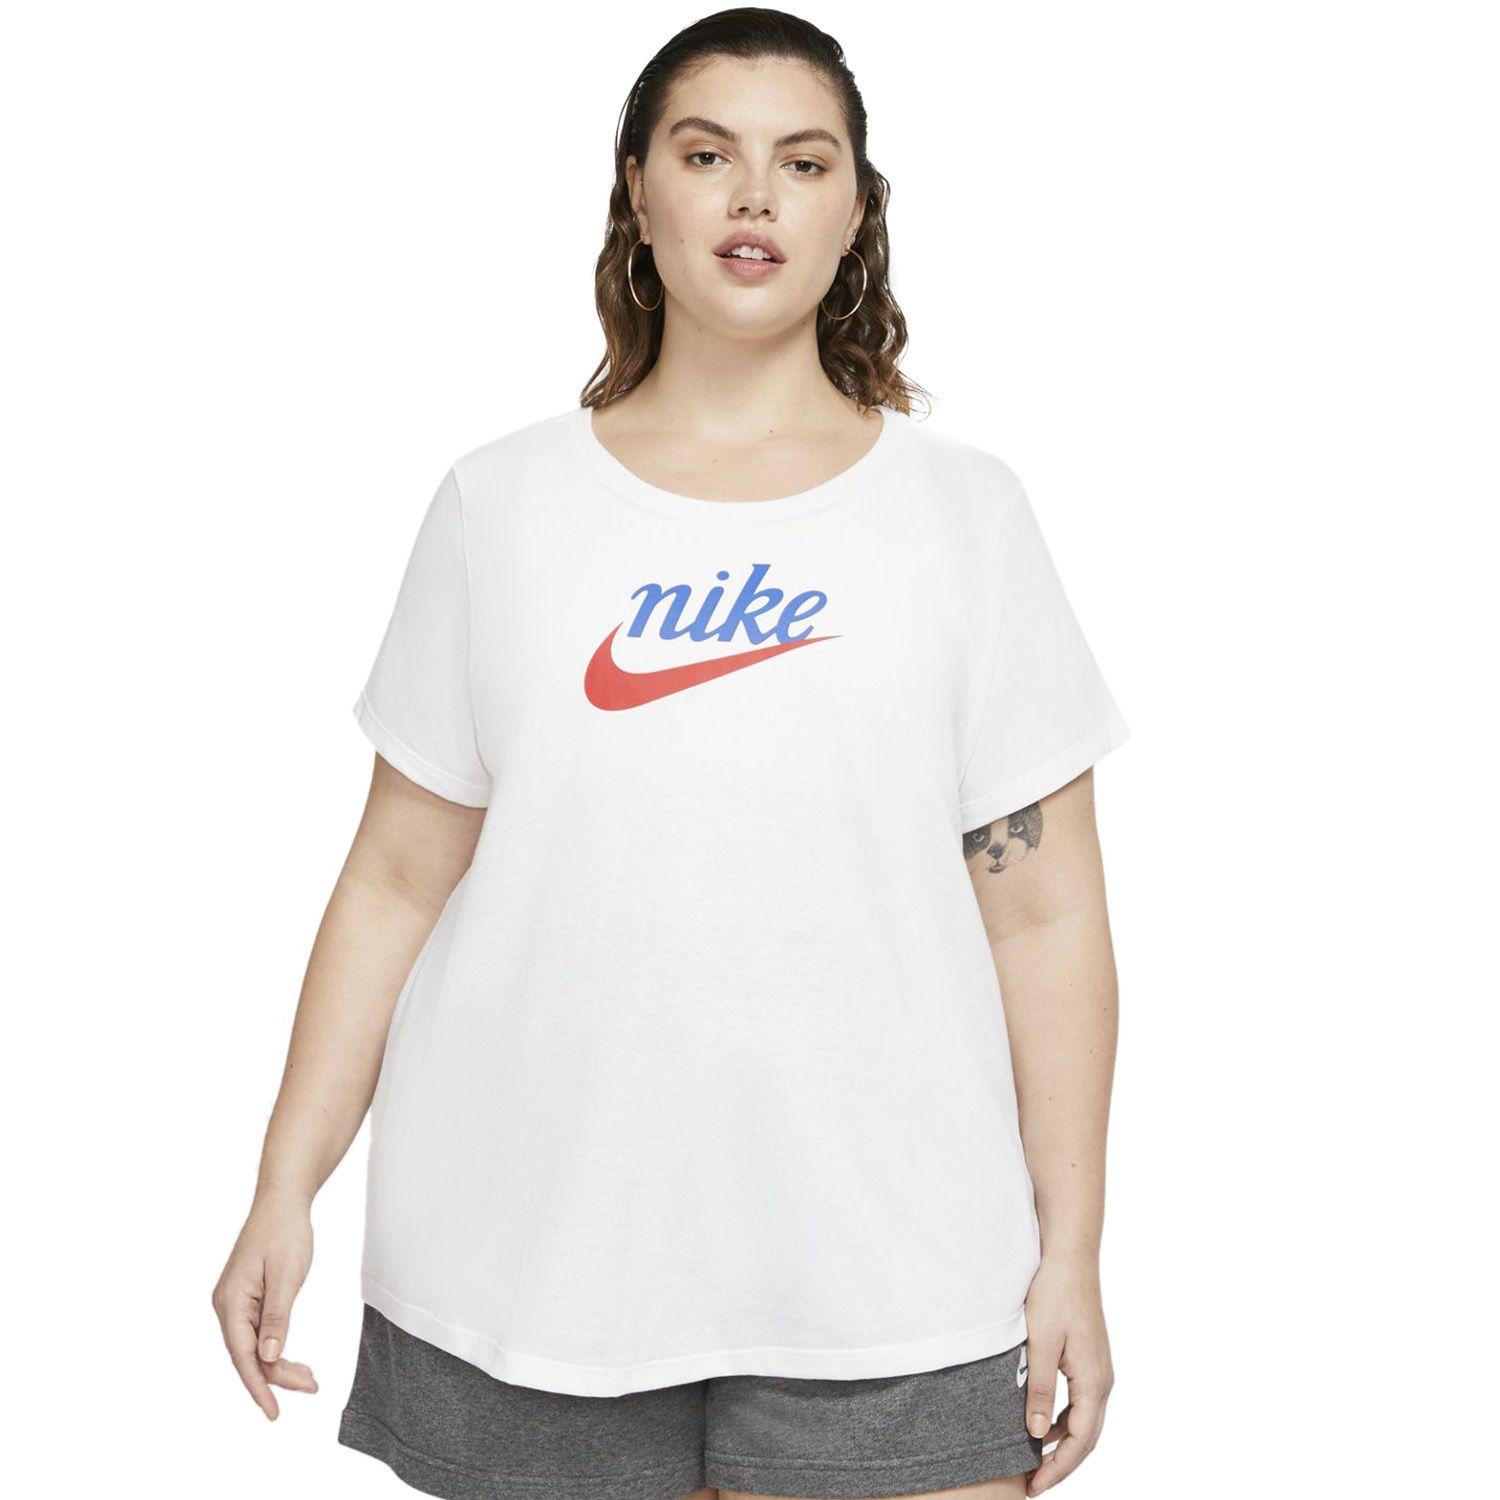 Womens Nike T-Shirts Clothing | Kohl's